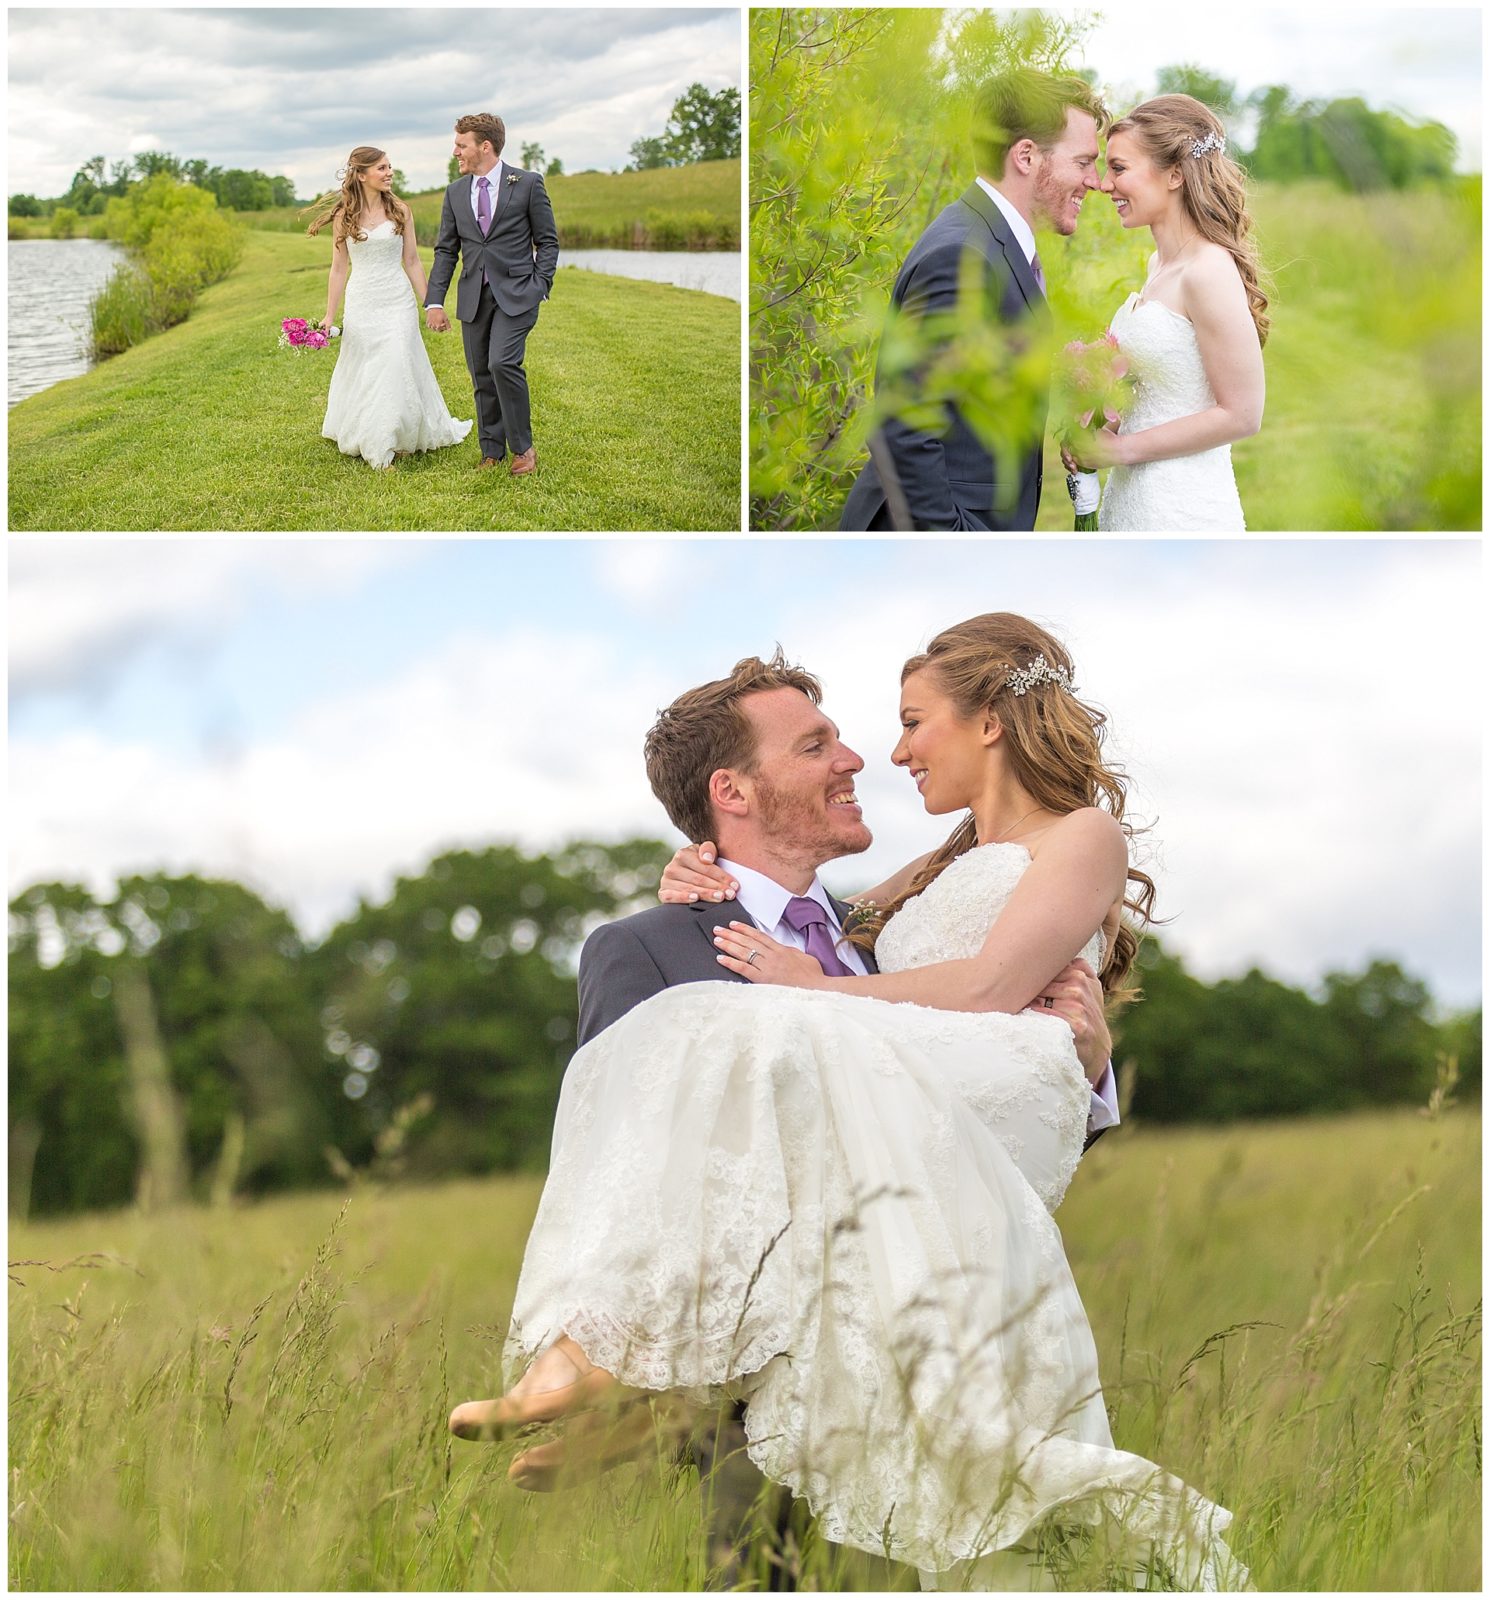 Luke & Leah's Wedding Photography Blog 15